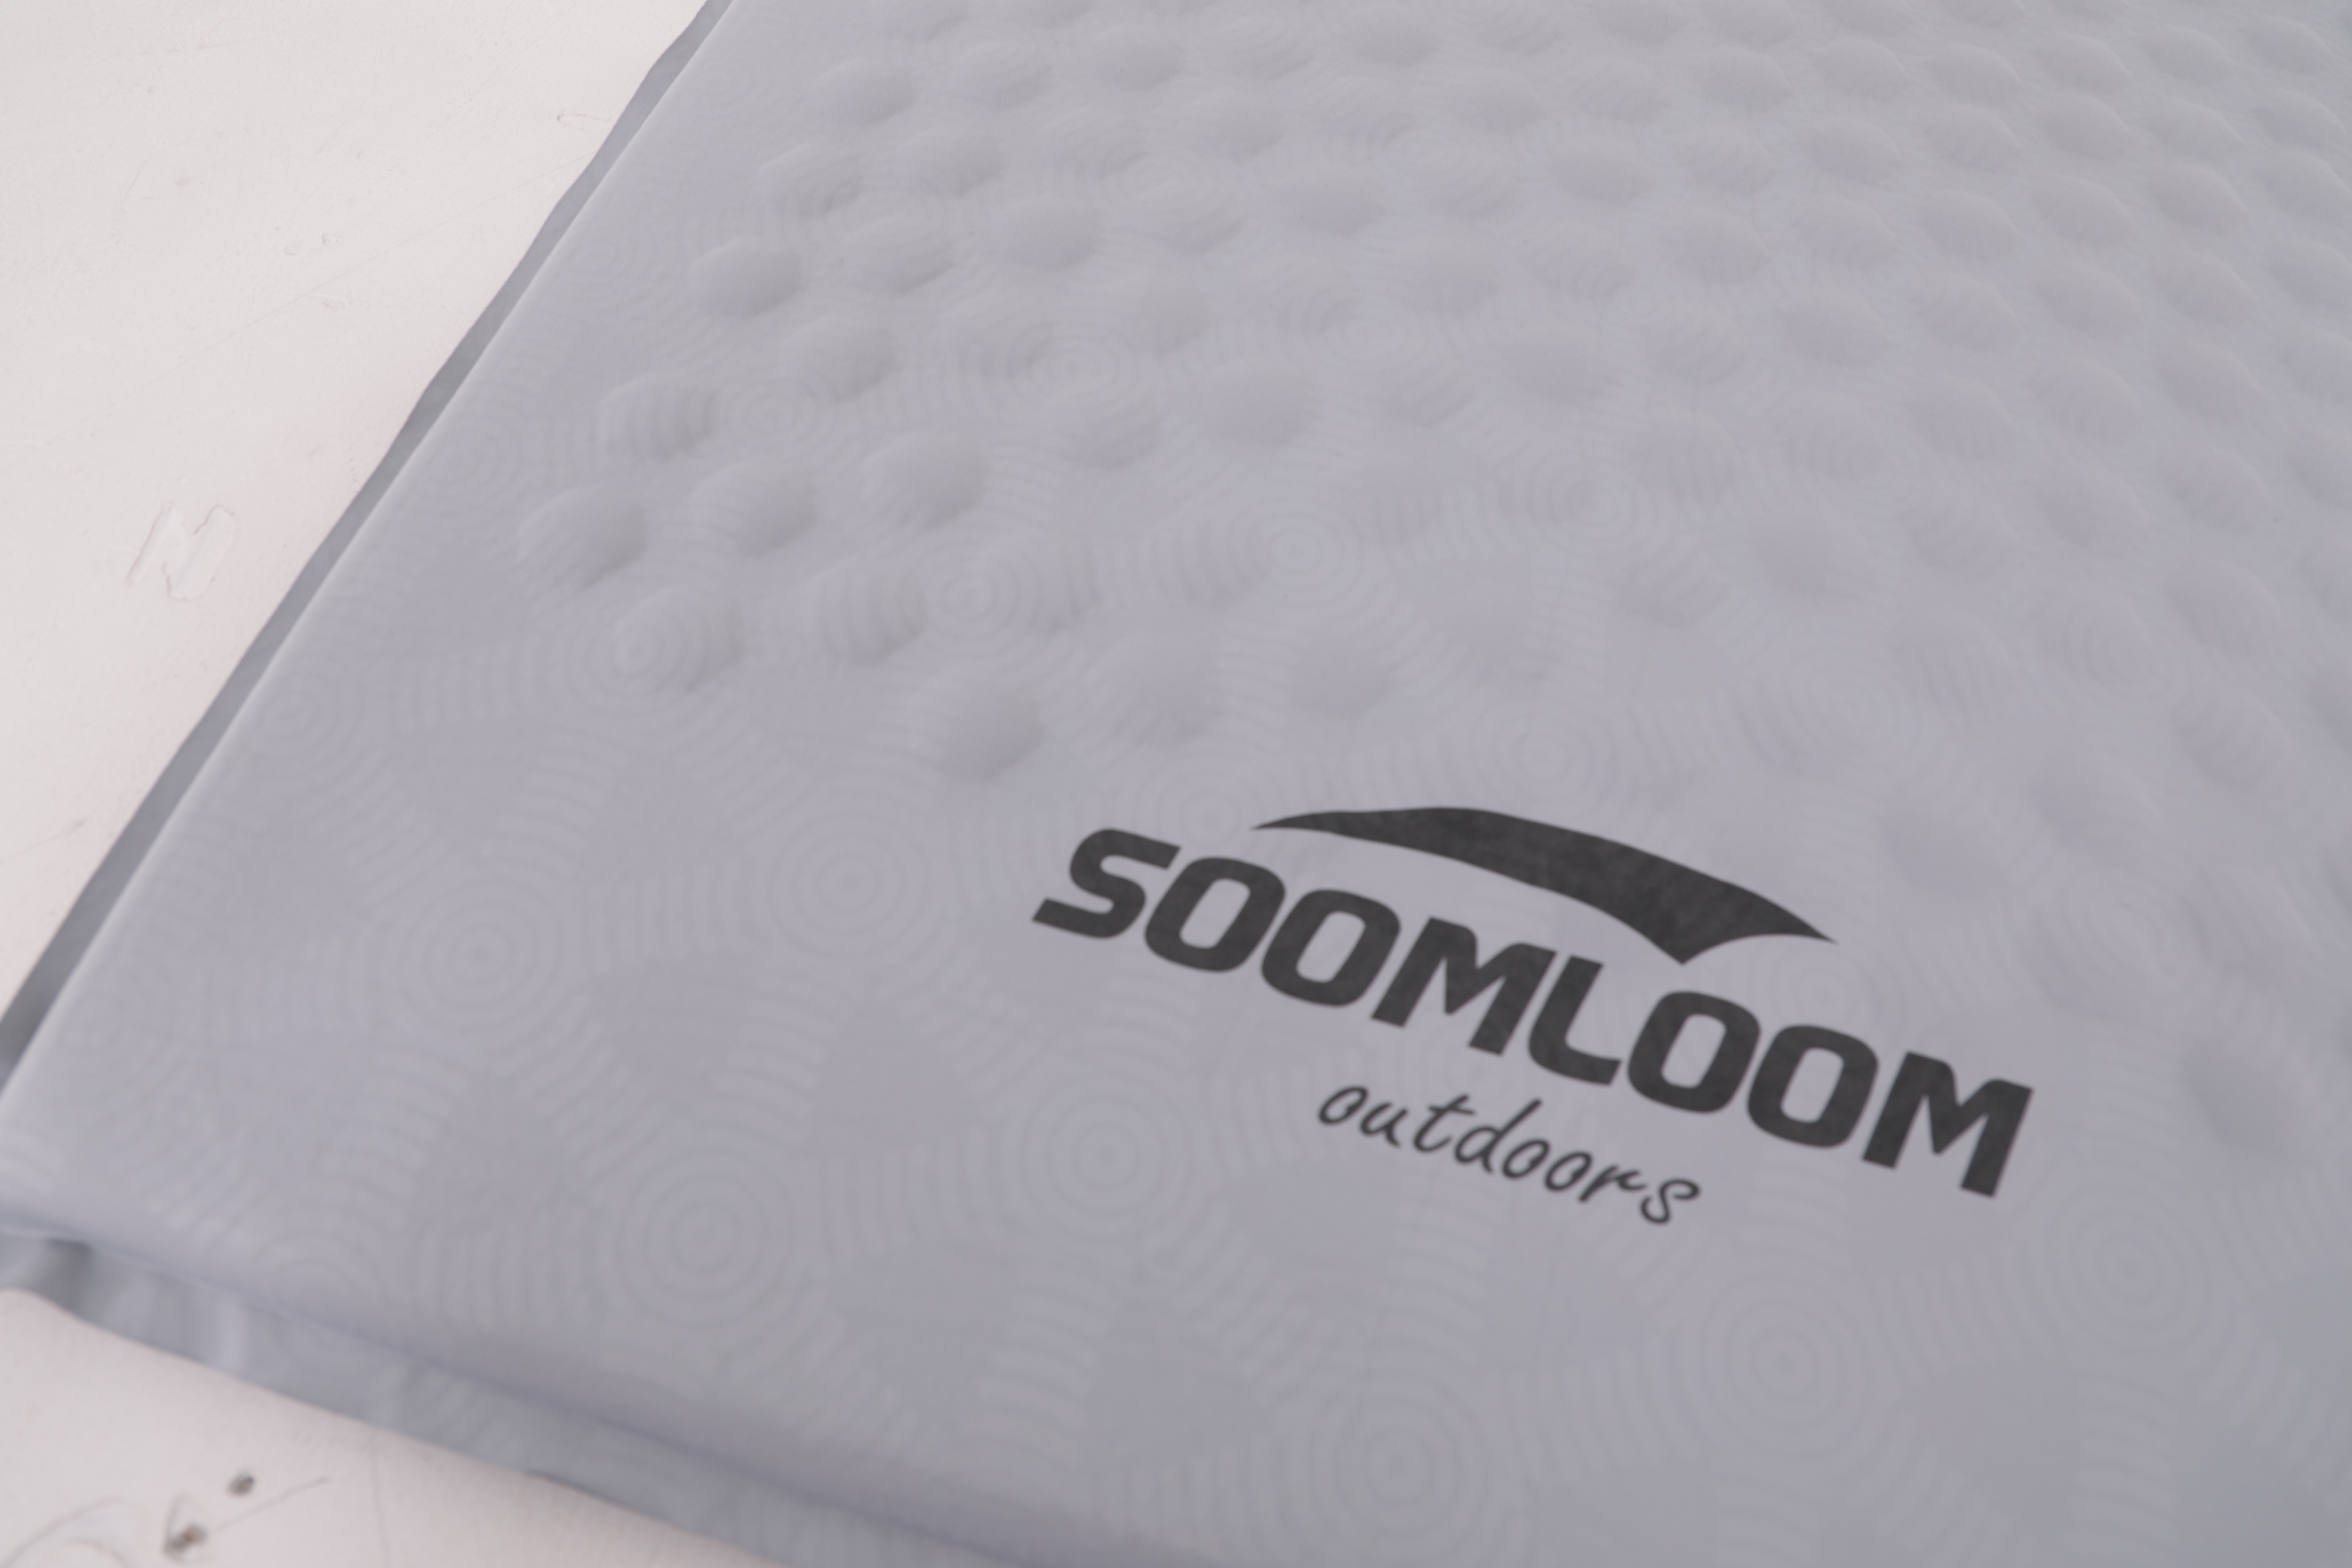 Soomloom エアーマット 自動膨張式 軽量 高反発 キャンプマット 185*55cm 極厚3cm 約850g 収納袋付き